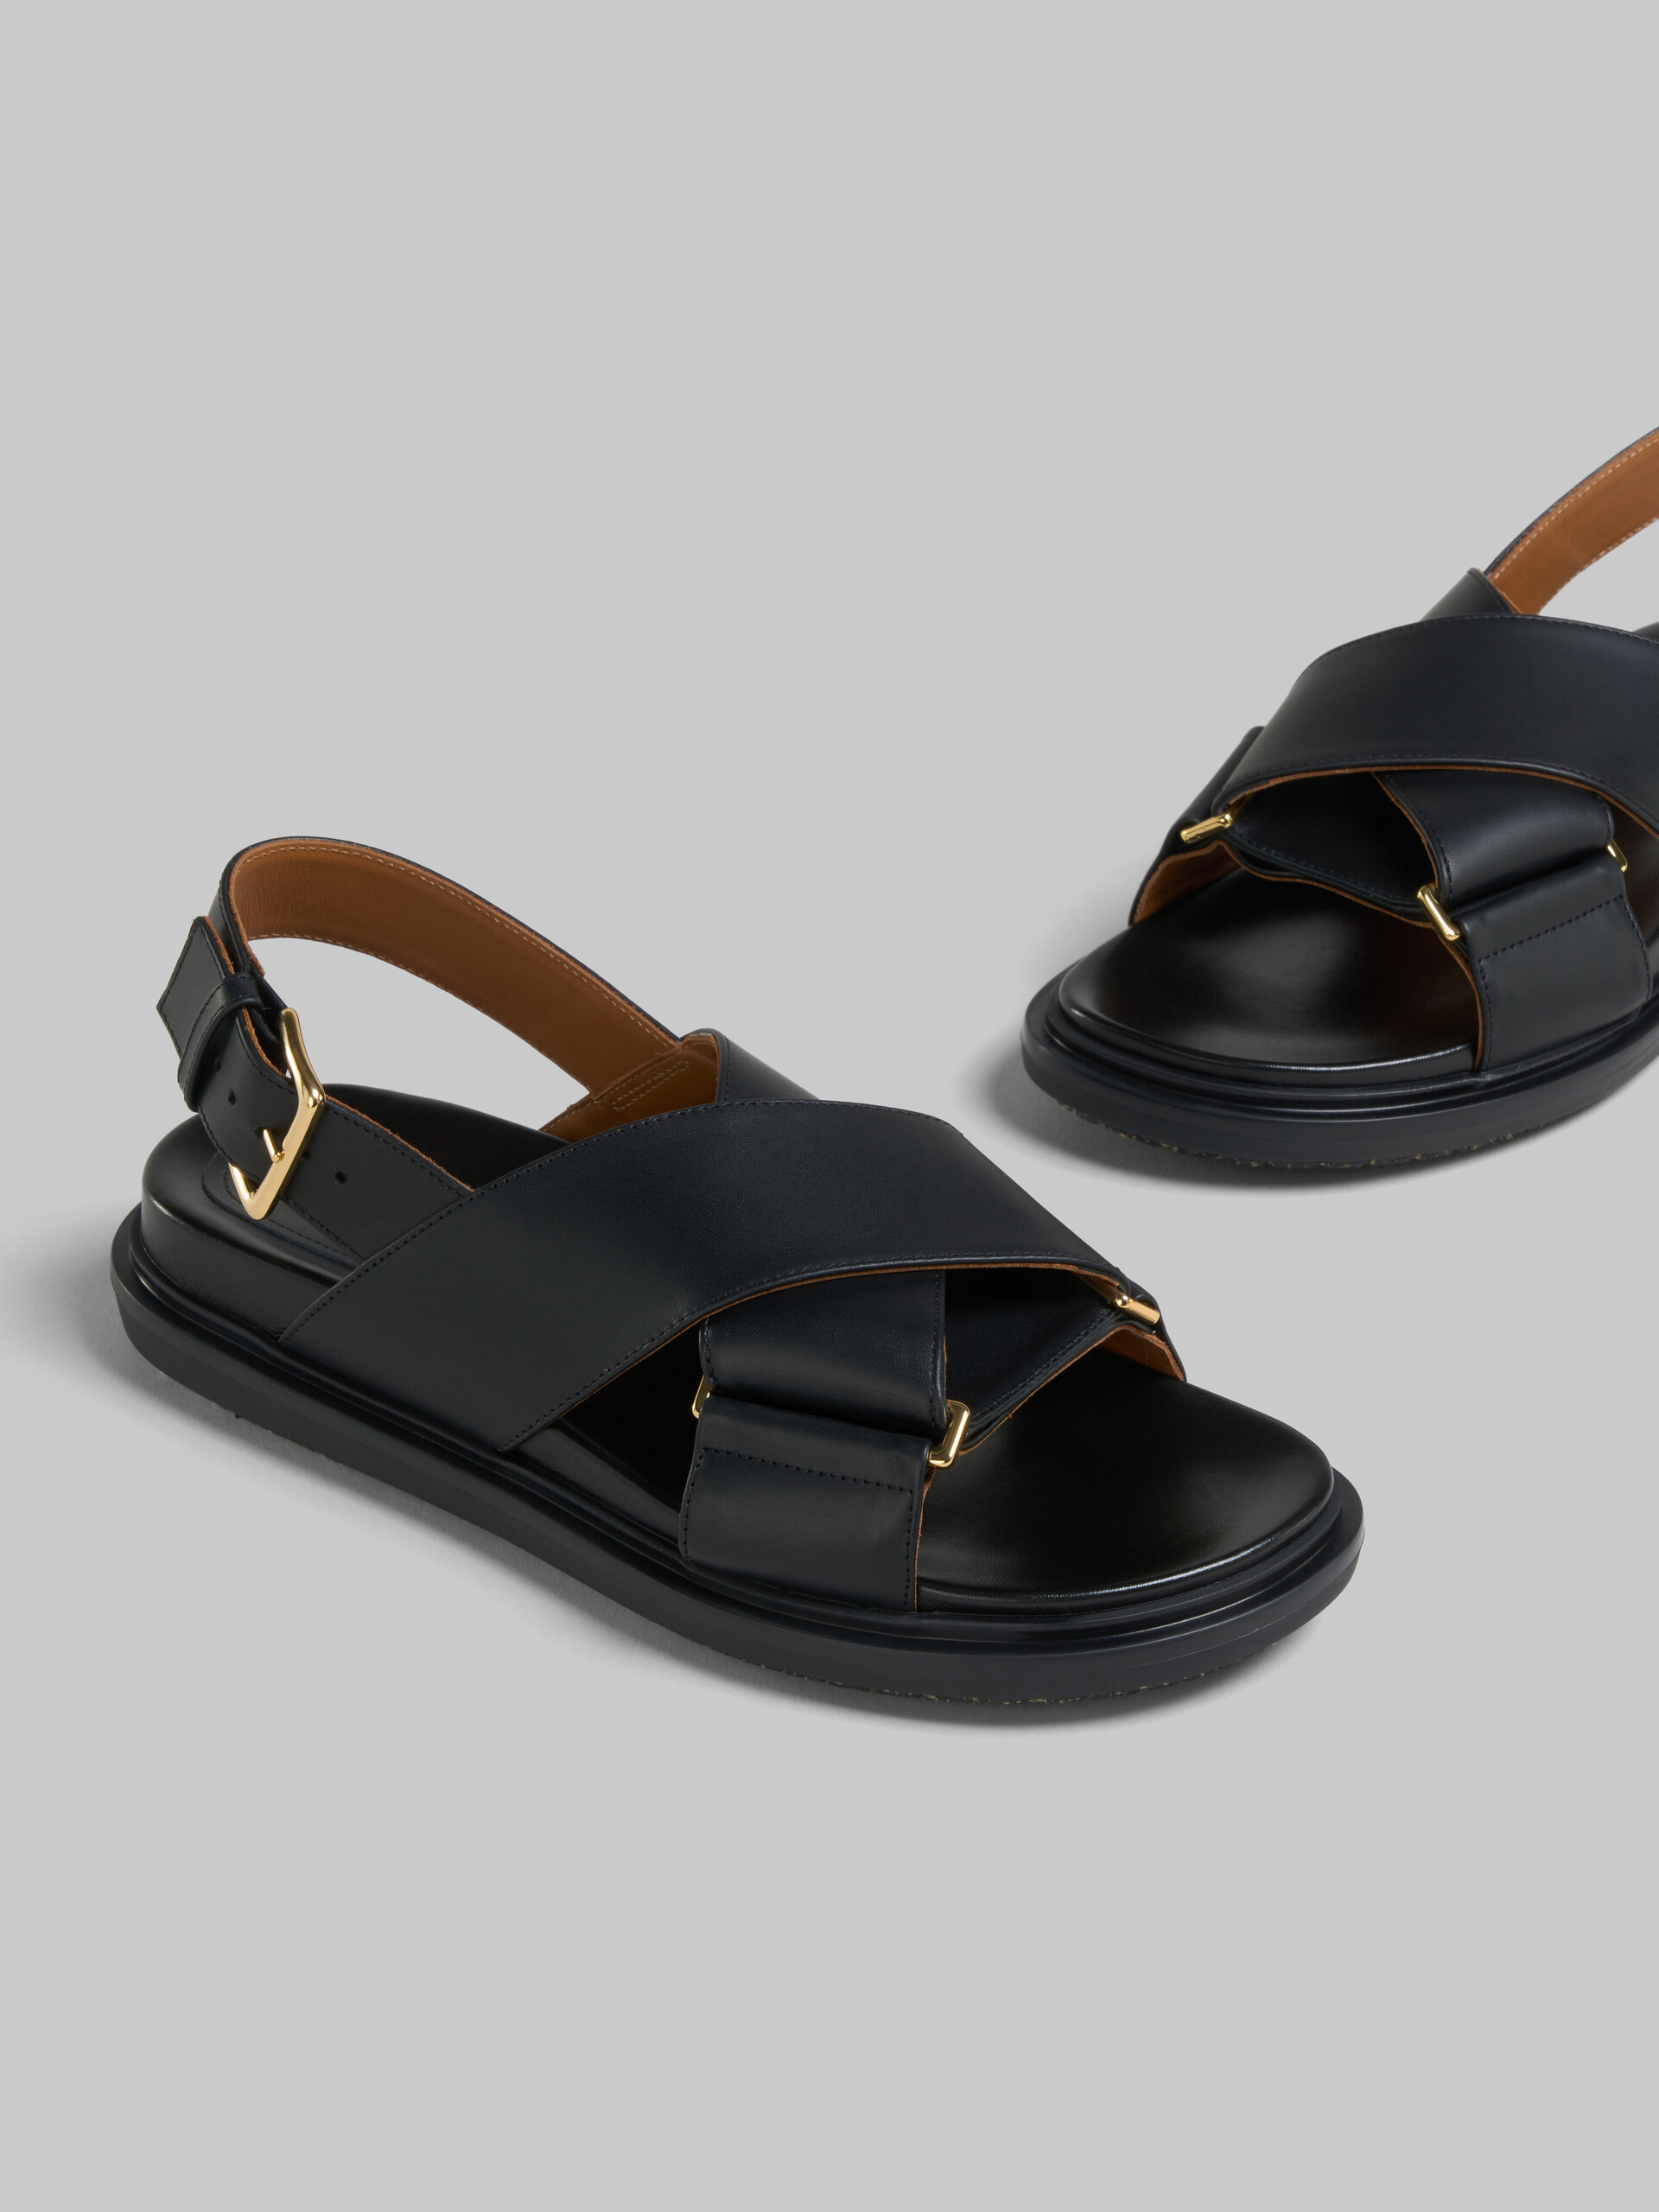 Fuchsia leather Fussbett - Sandals - Image 5